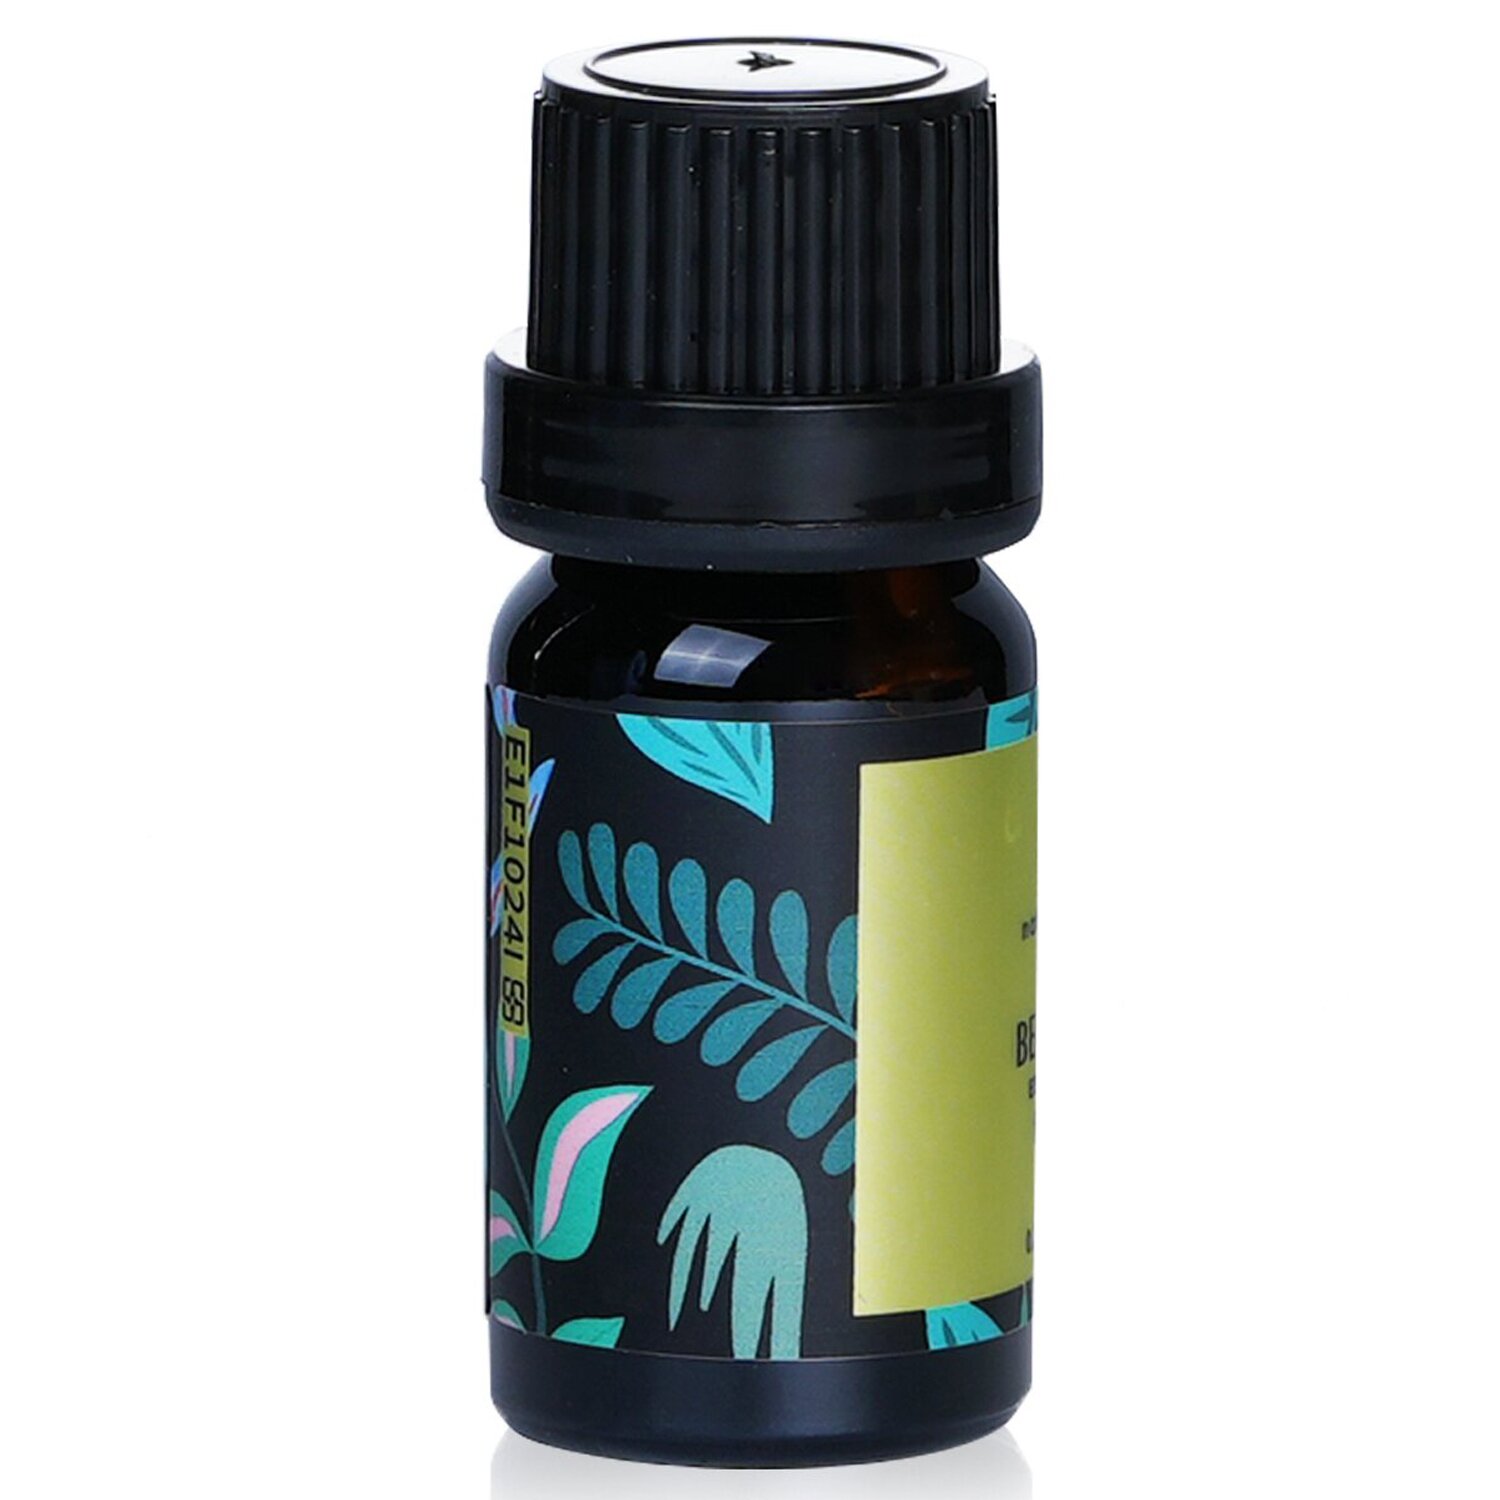 Natural Beauty Essential Oil - Bergamot 10ml/0.34oz